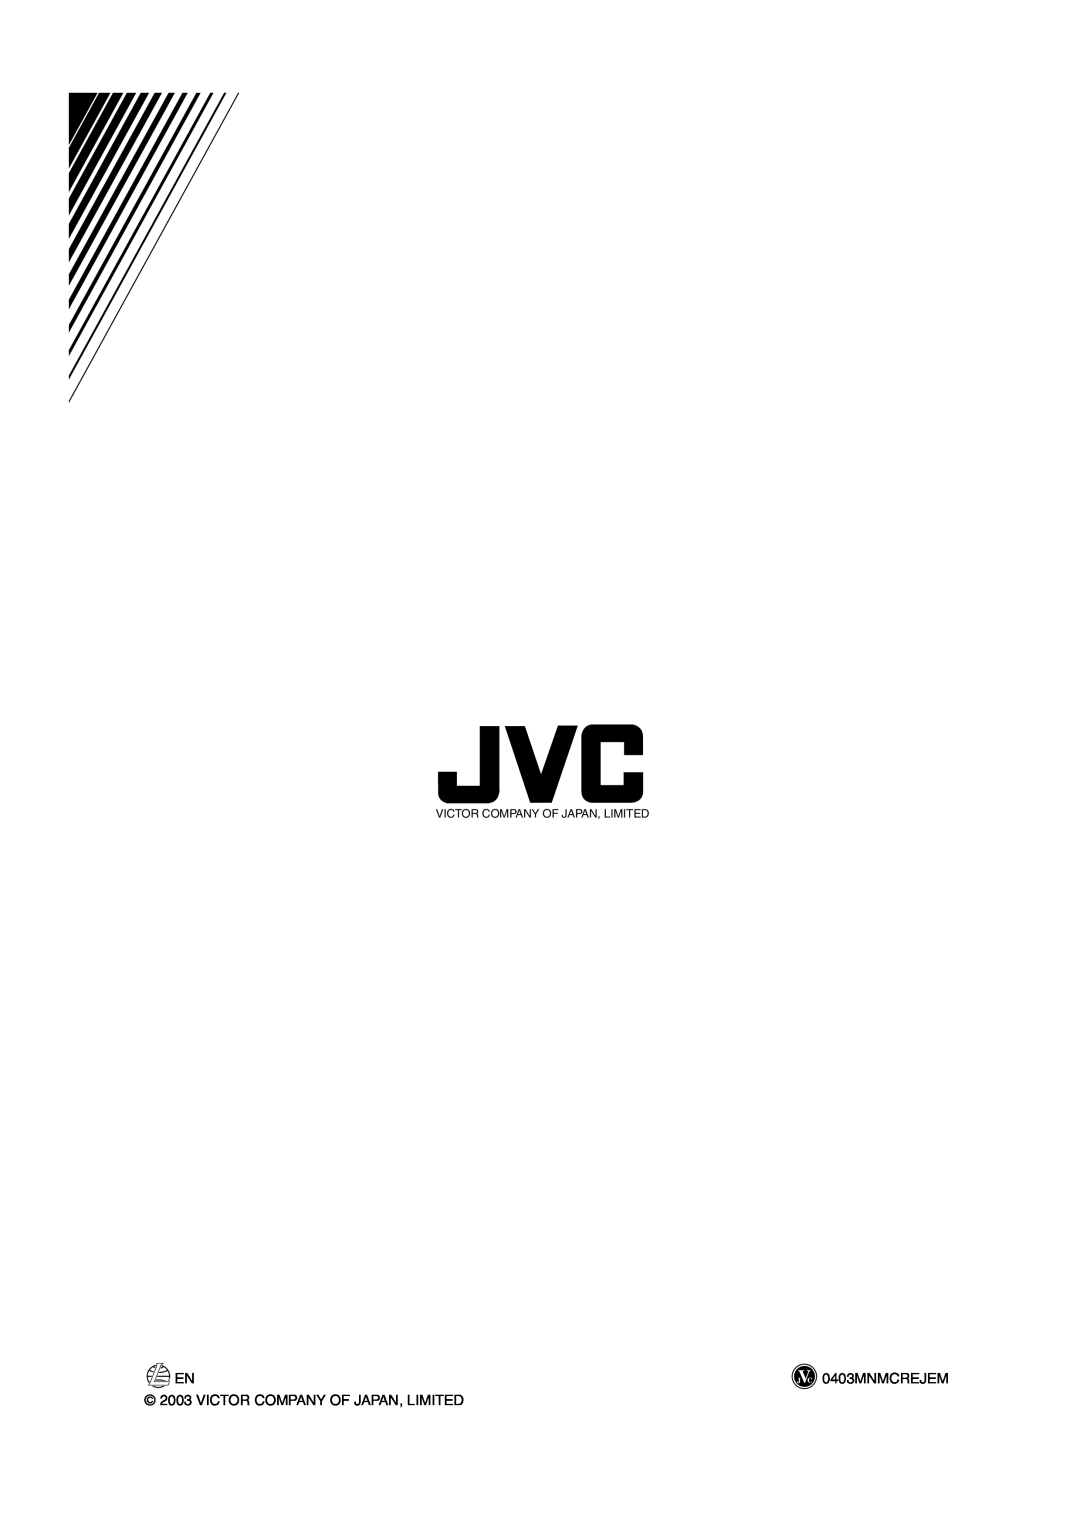 JVC LVT1040-003A manual 0403MNMCREJEM, Victor Company Of Japan, Limited 